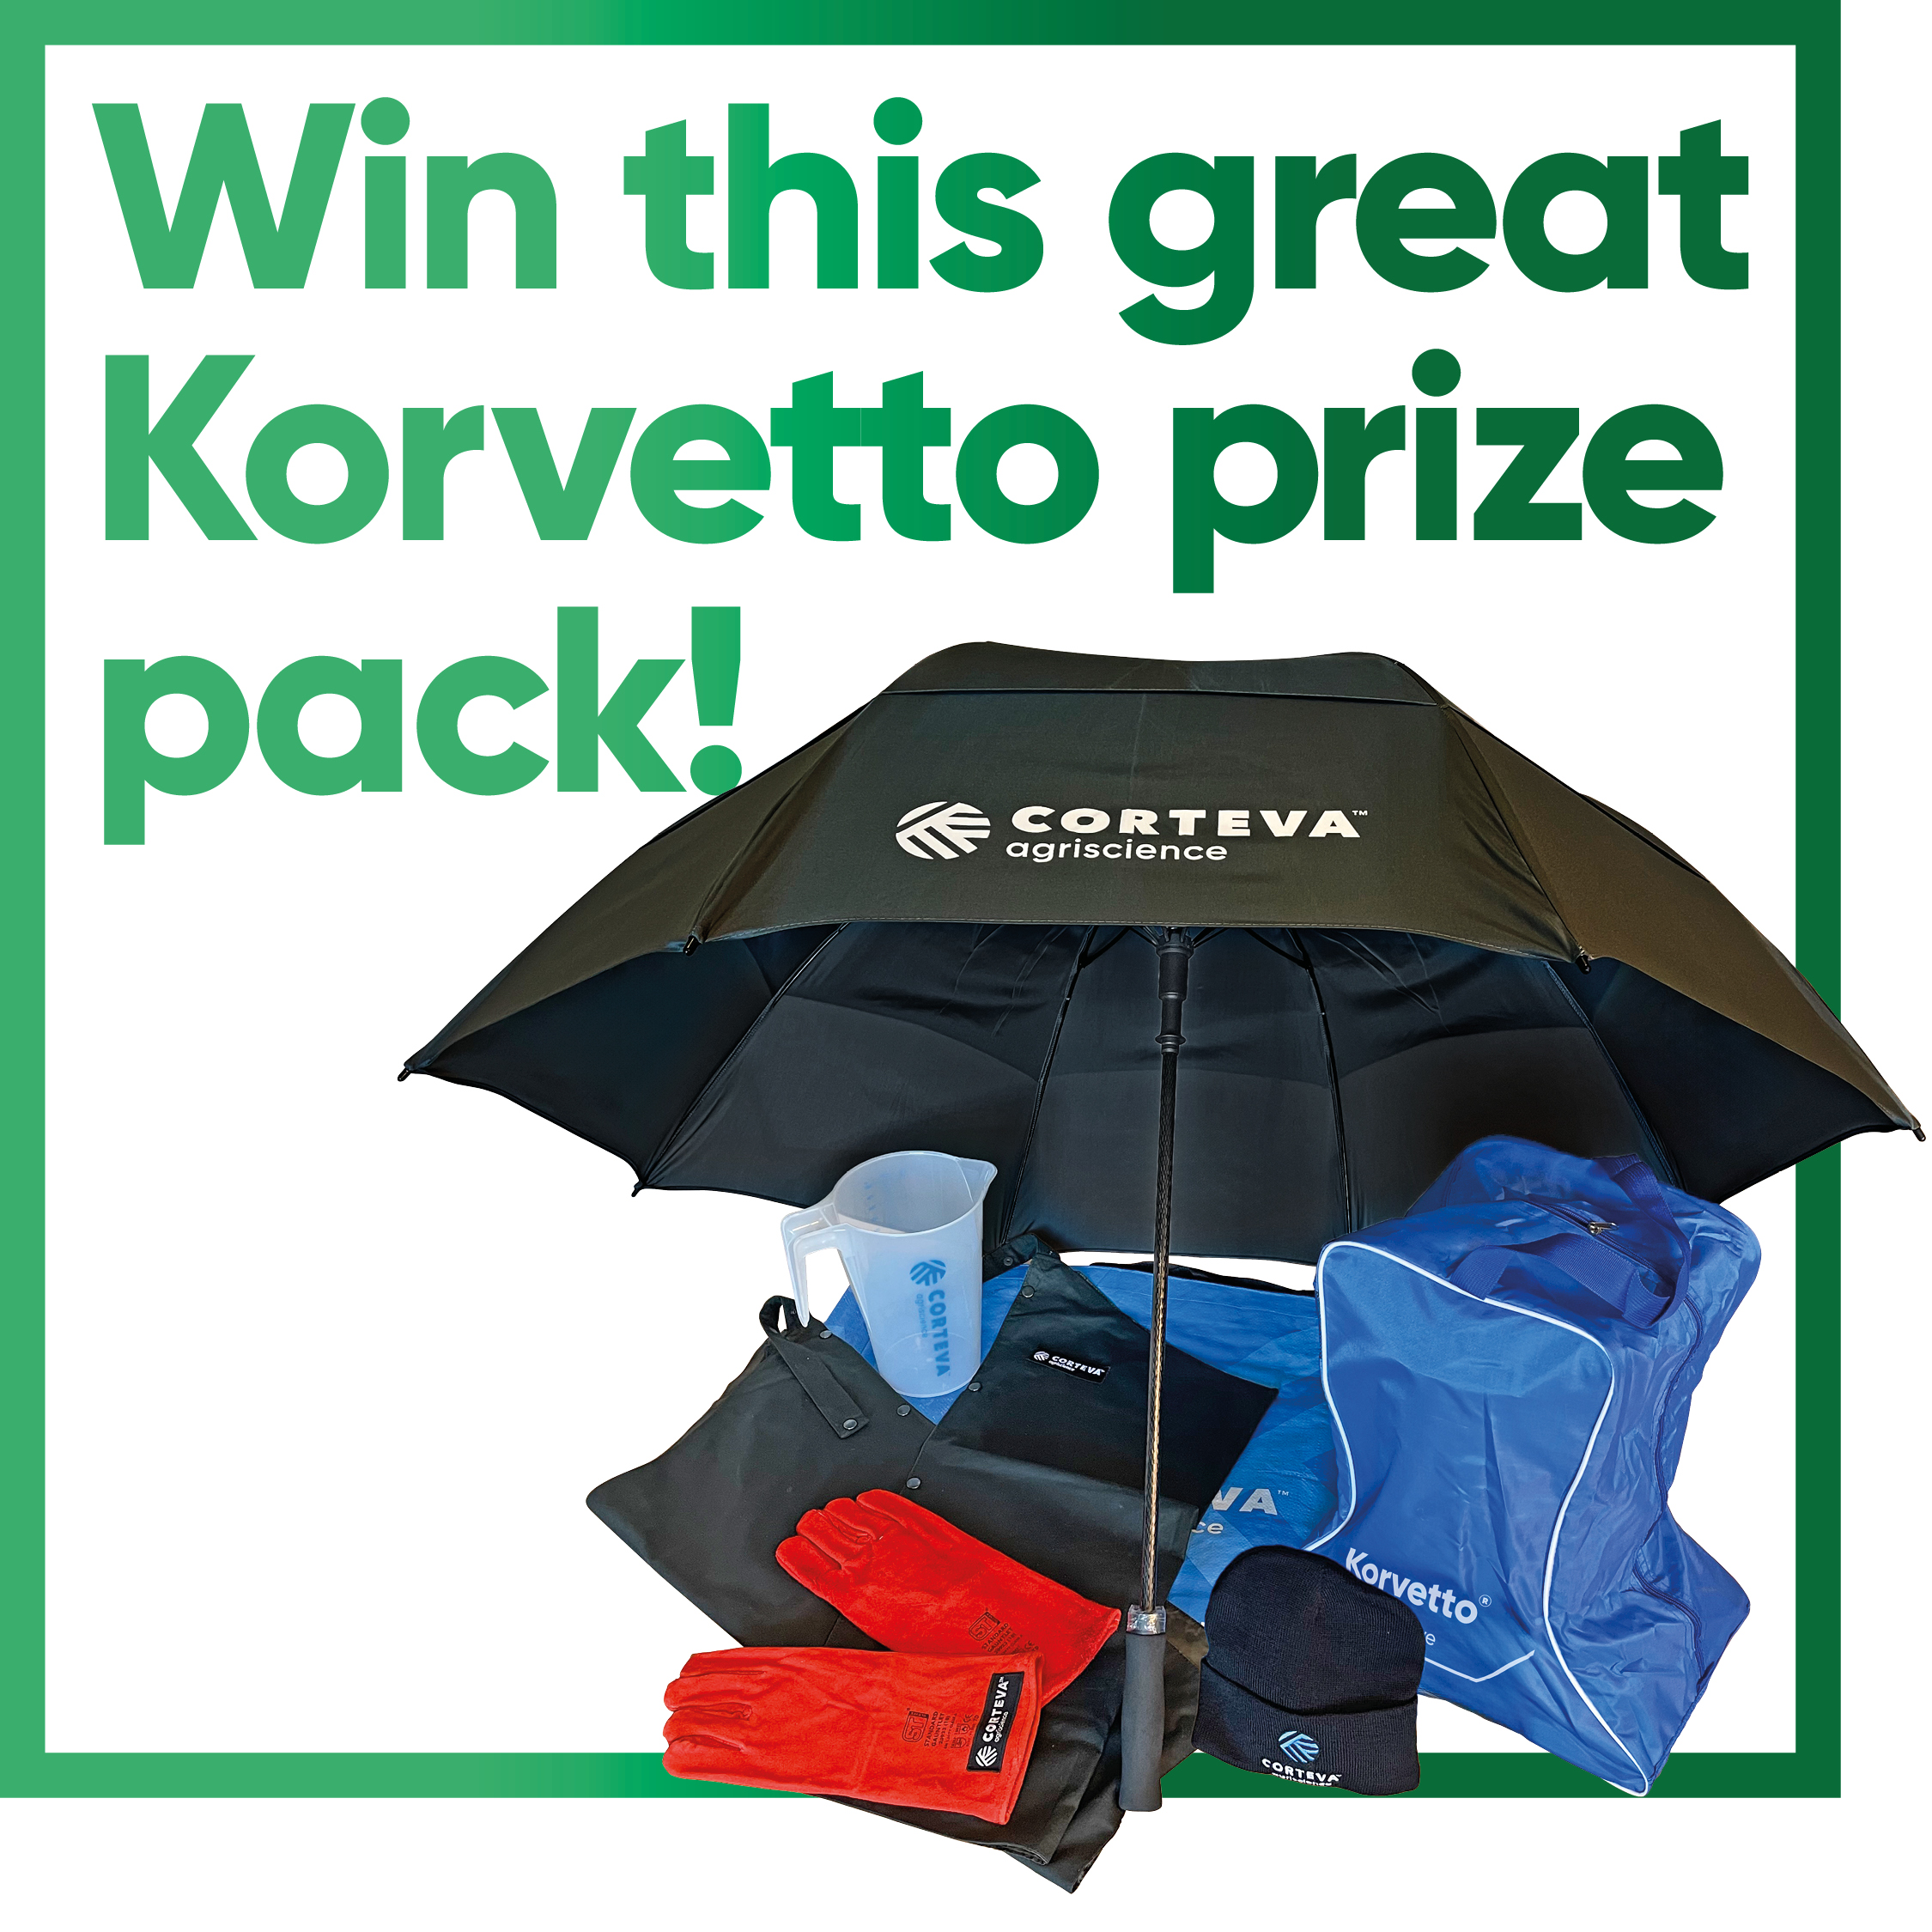 Korvetto prize pack